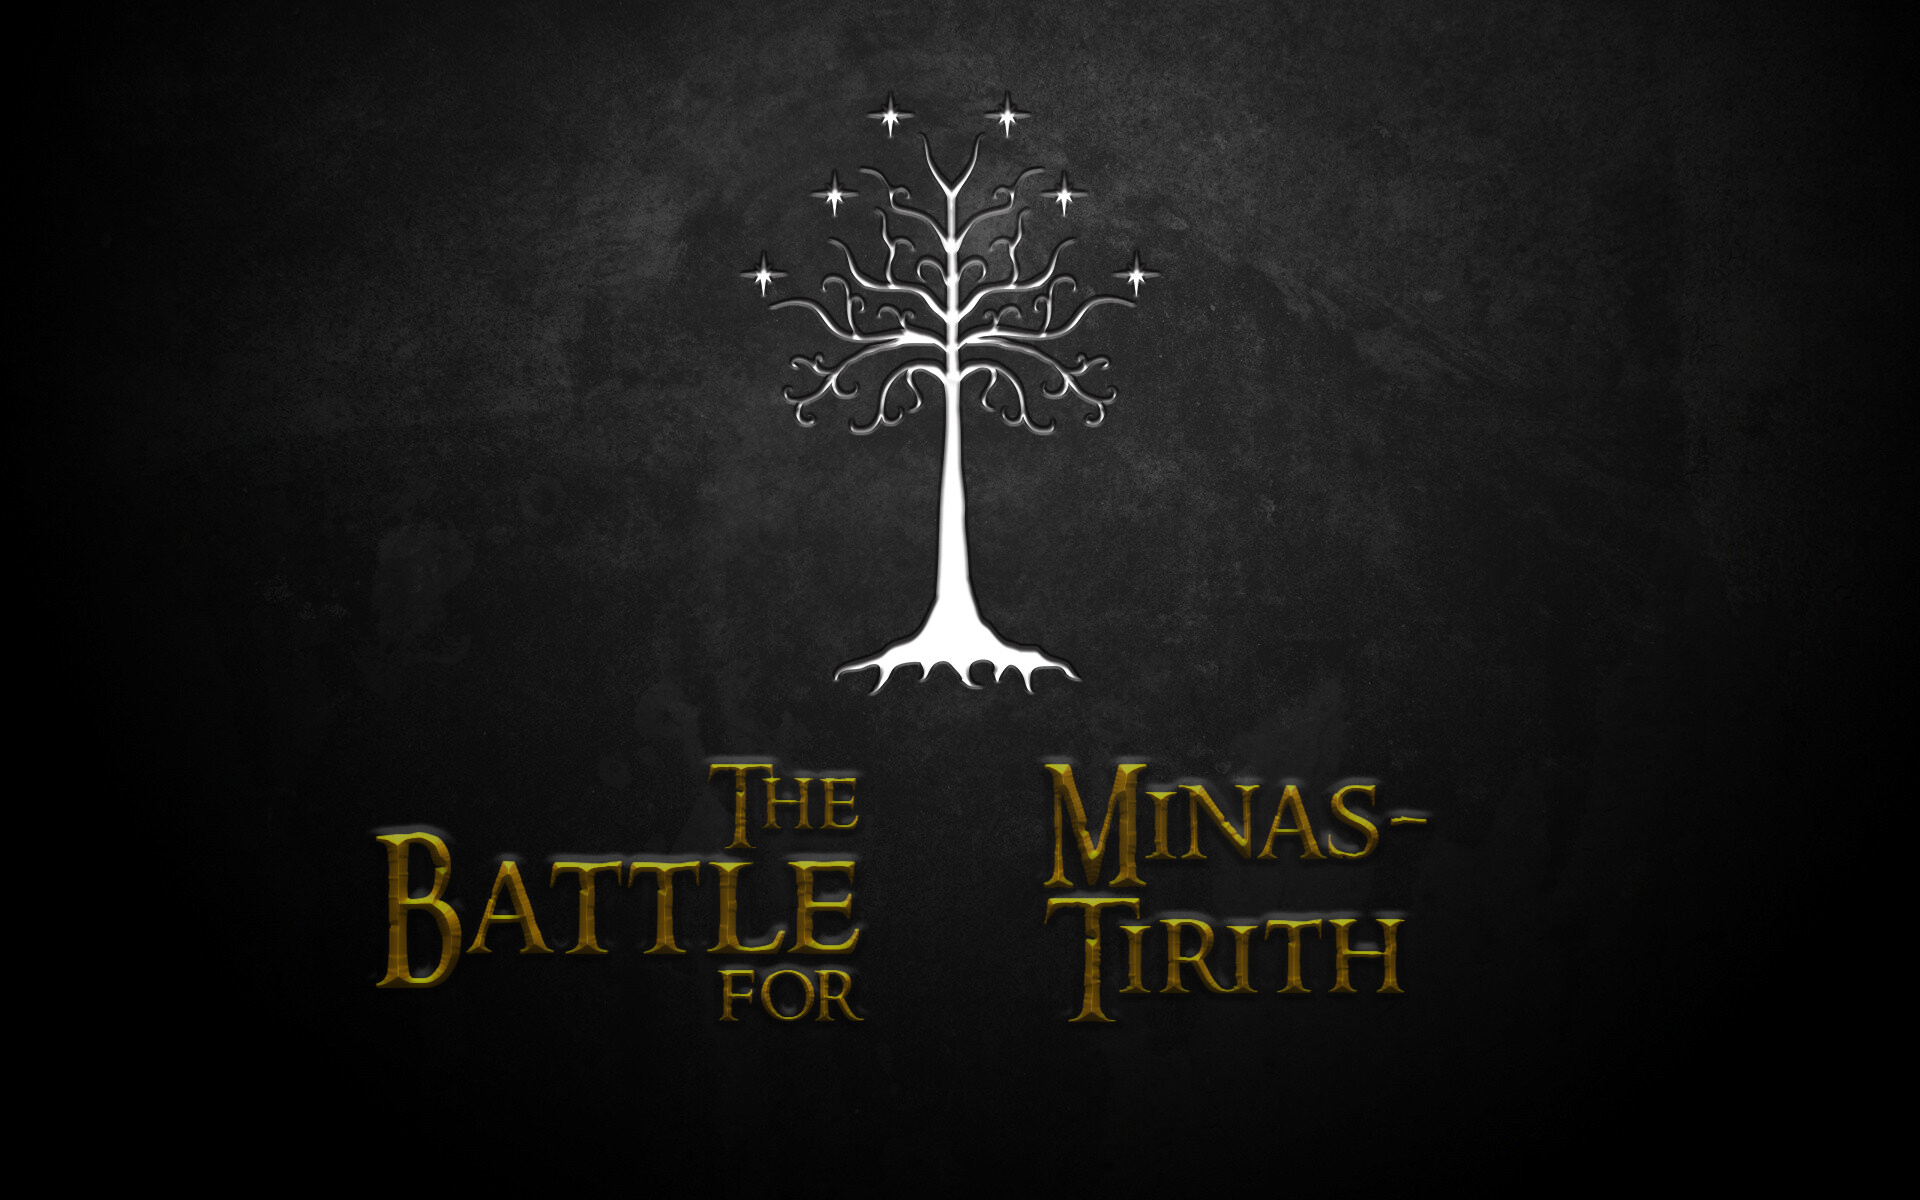 ArtStation - Minas Tirith